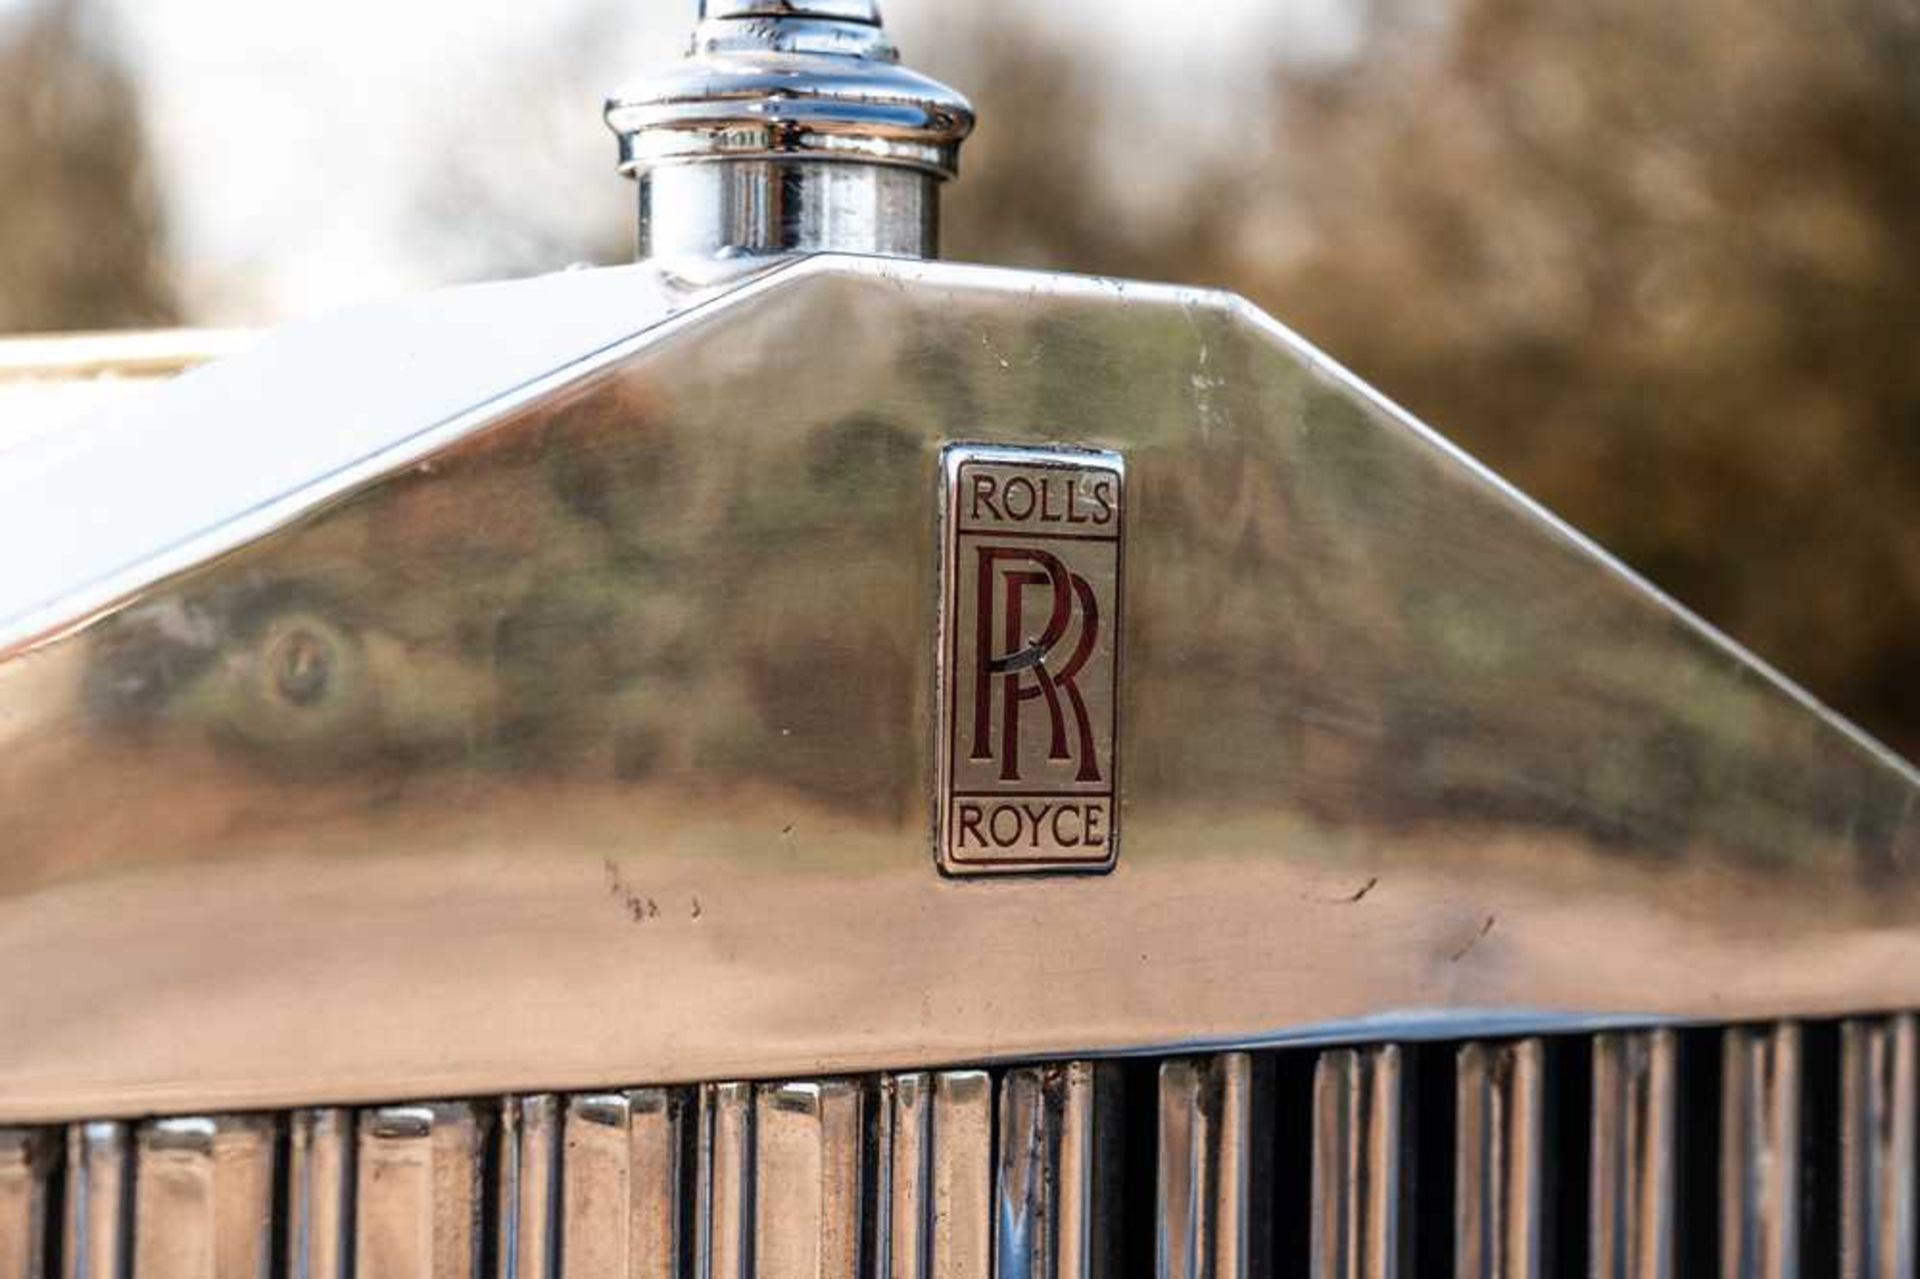 1929 Rolls-Royce Phantom II Limousine Coachwork by Park Ward - Image 22 of 92